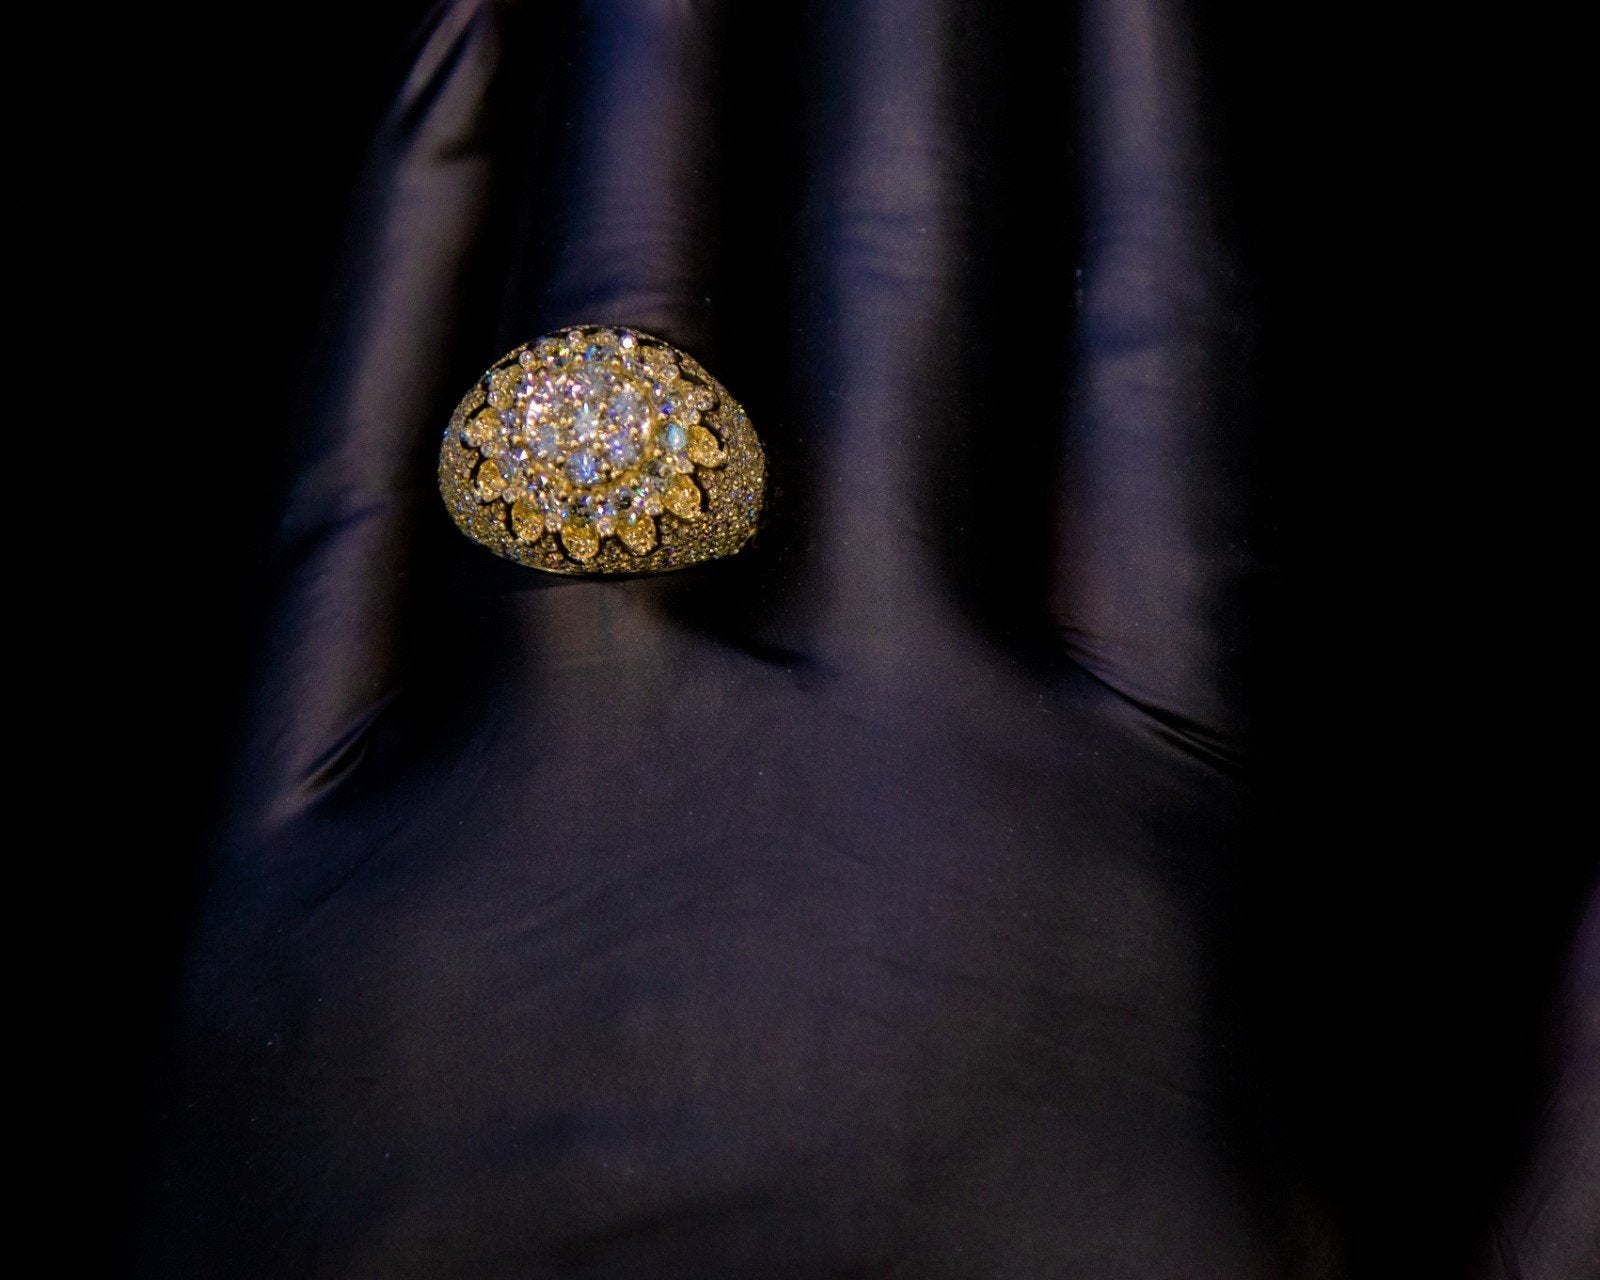 5.00 CT. VVS Diamond Ring in Gold - White Carat Diamonds 